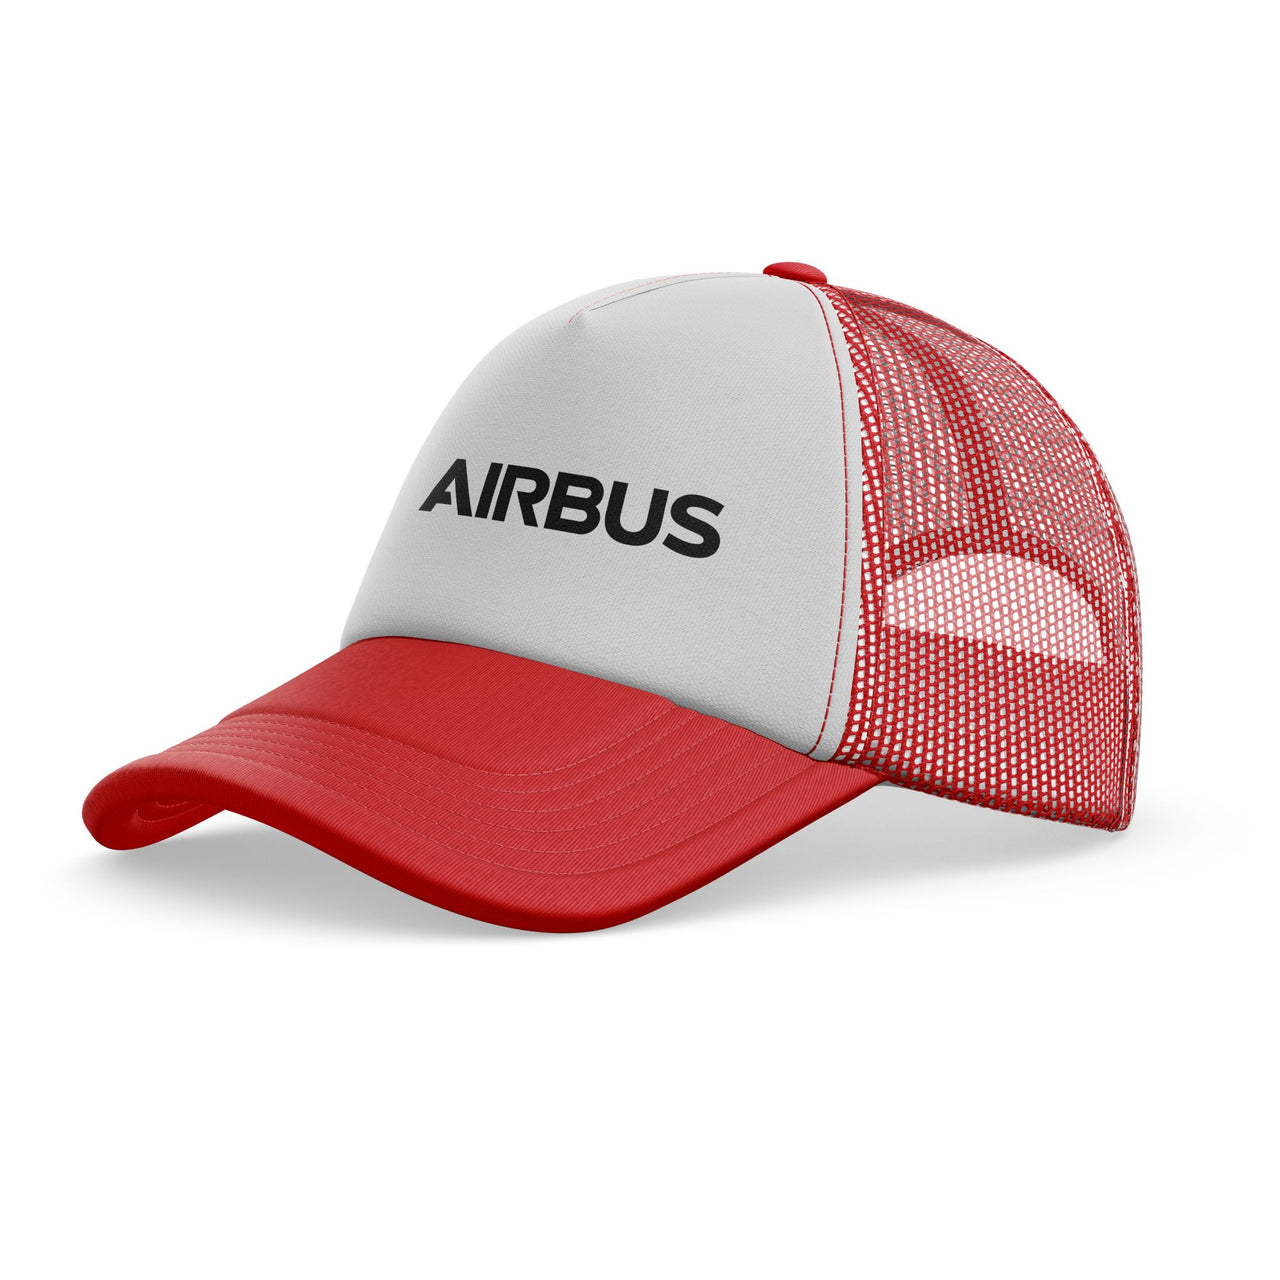 Airbus & Text Designed Trucker Caps & Hats